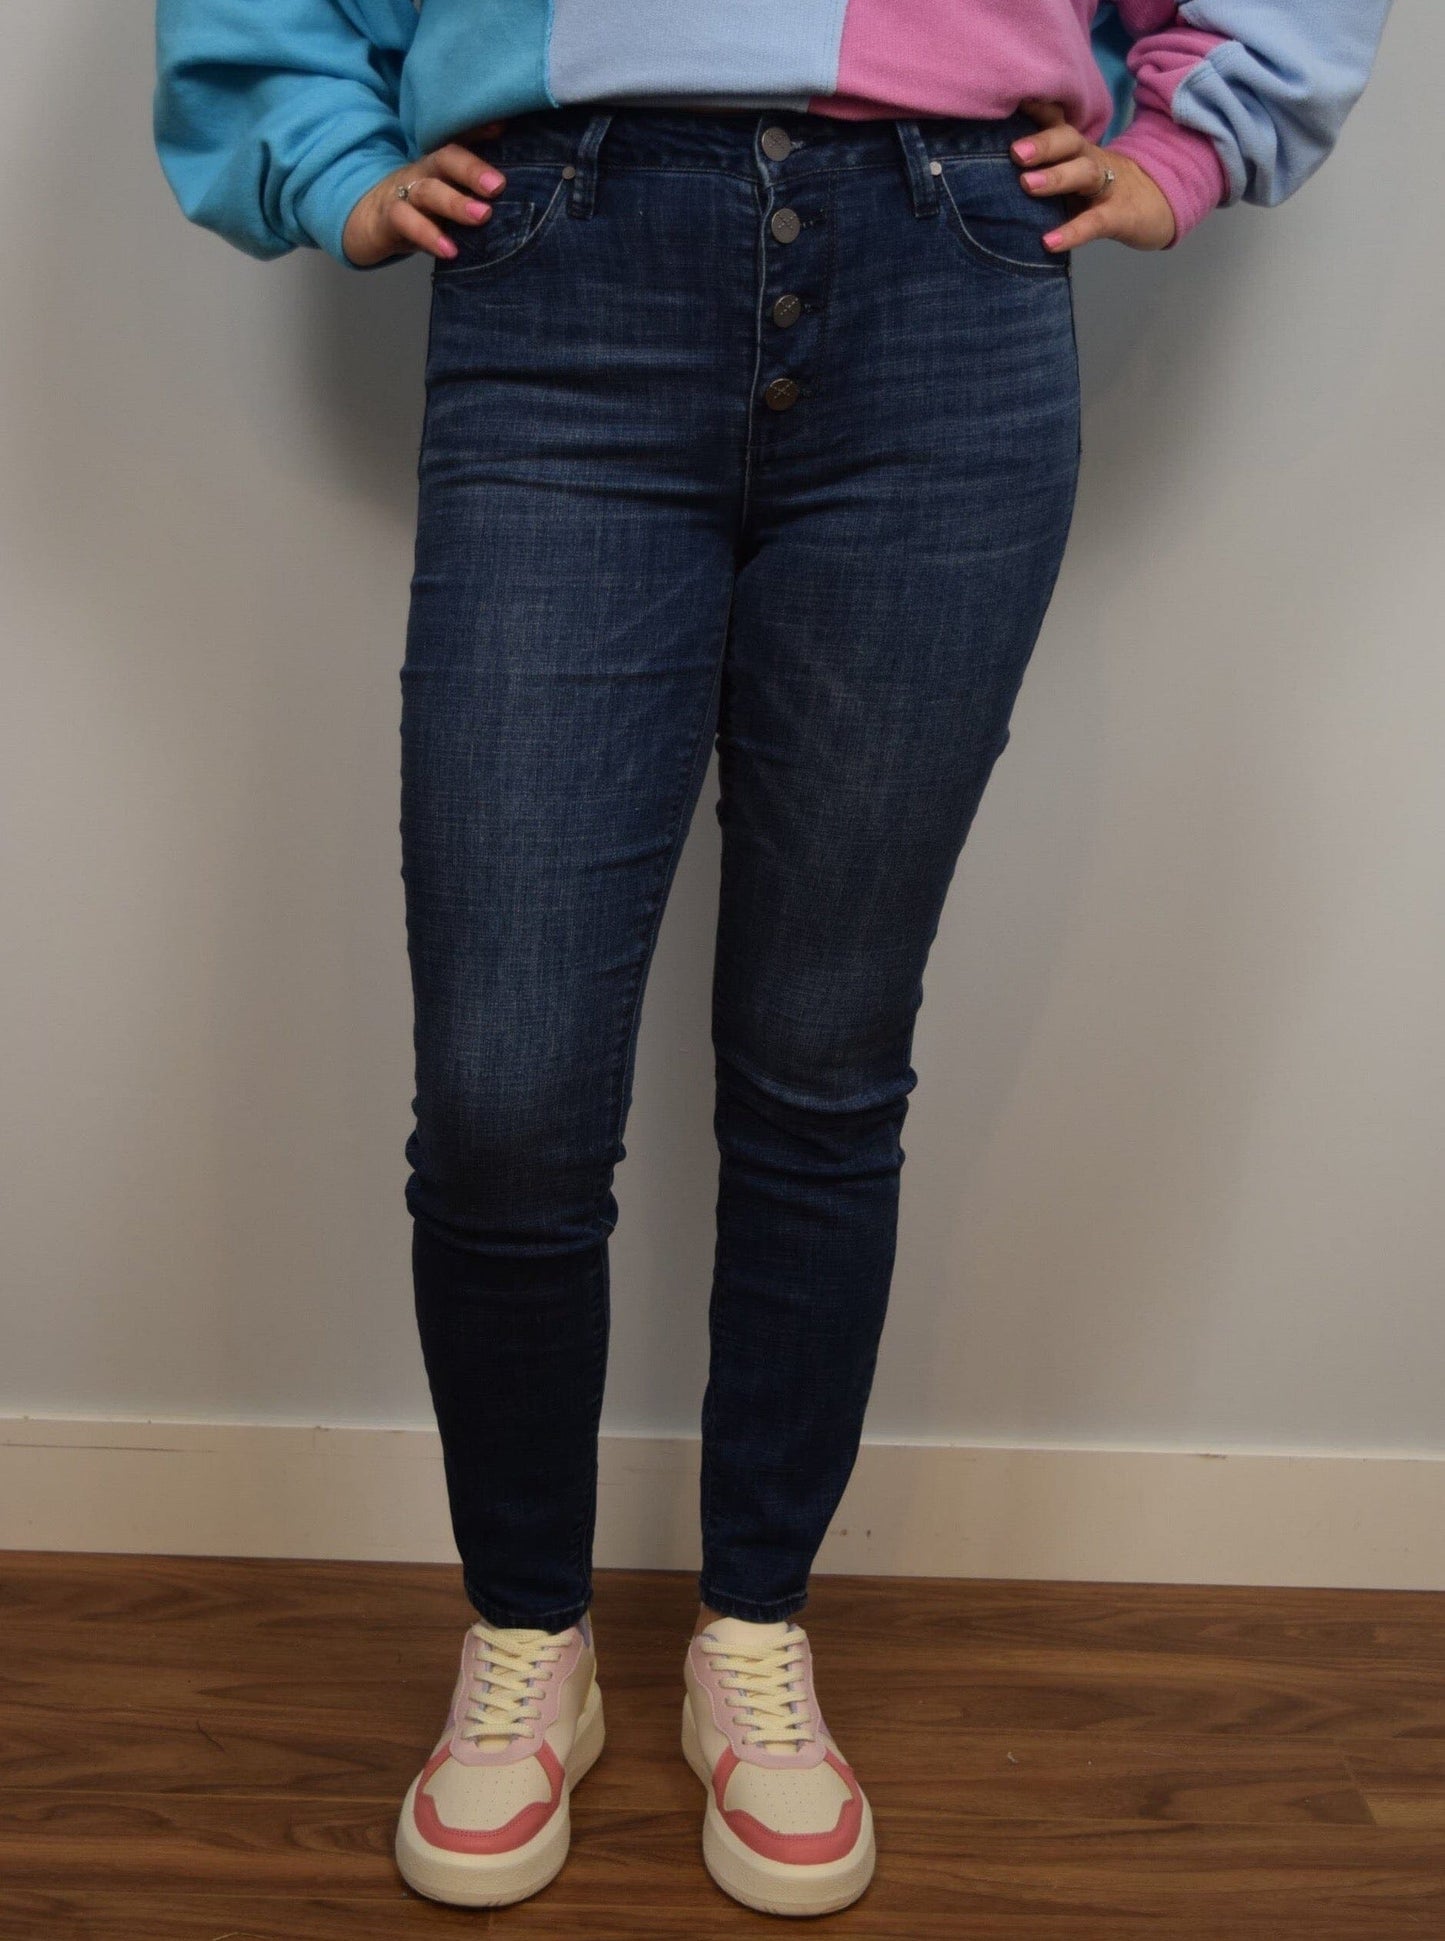 Yubnlvae Womens Jeans Women Fashion High Waist Pocket Solid Casual